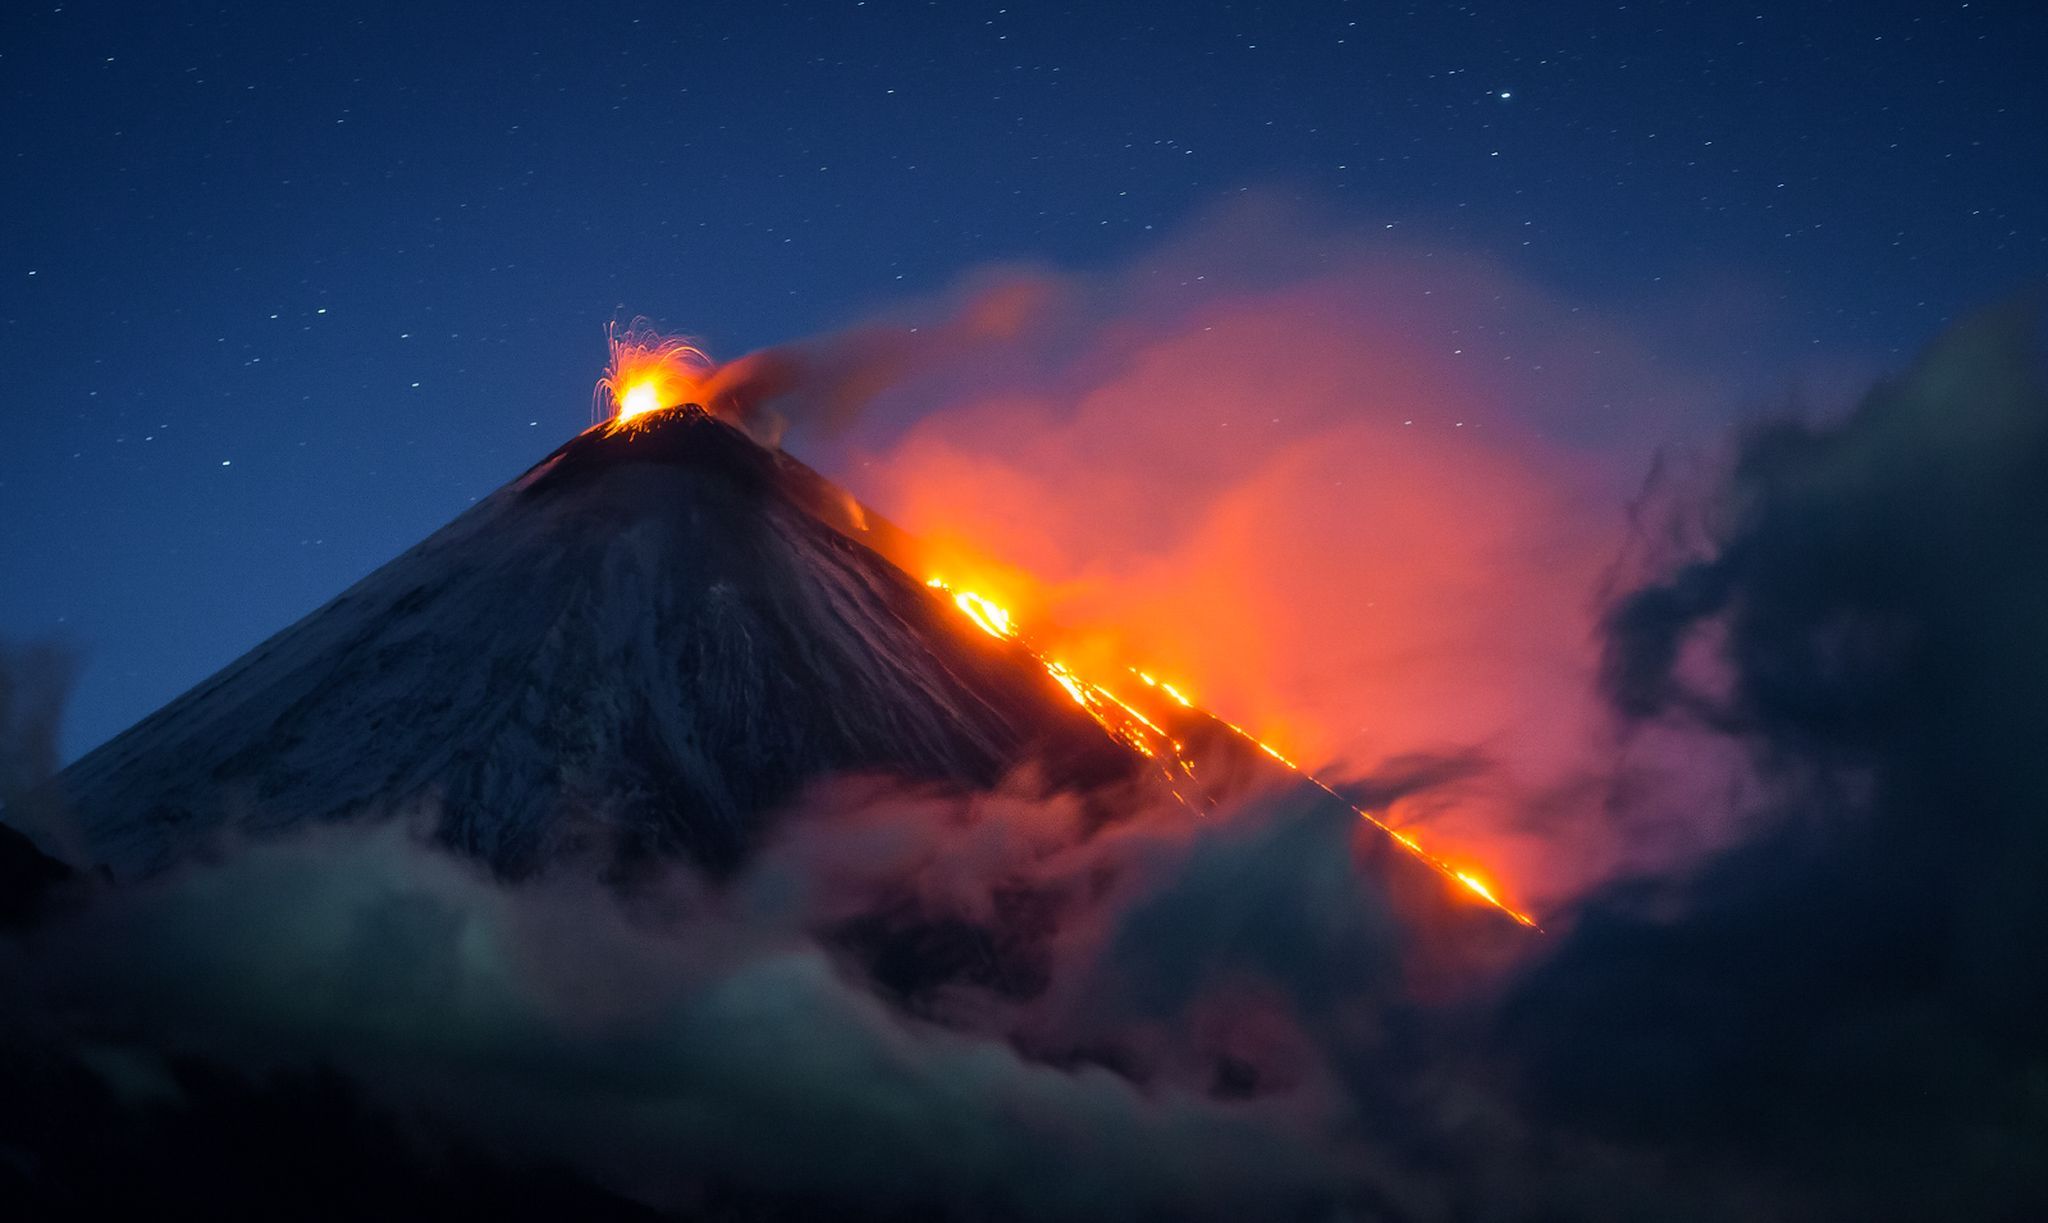 Volcanic eruption by night